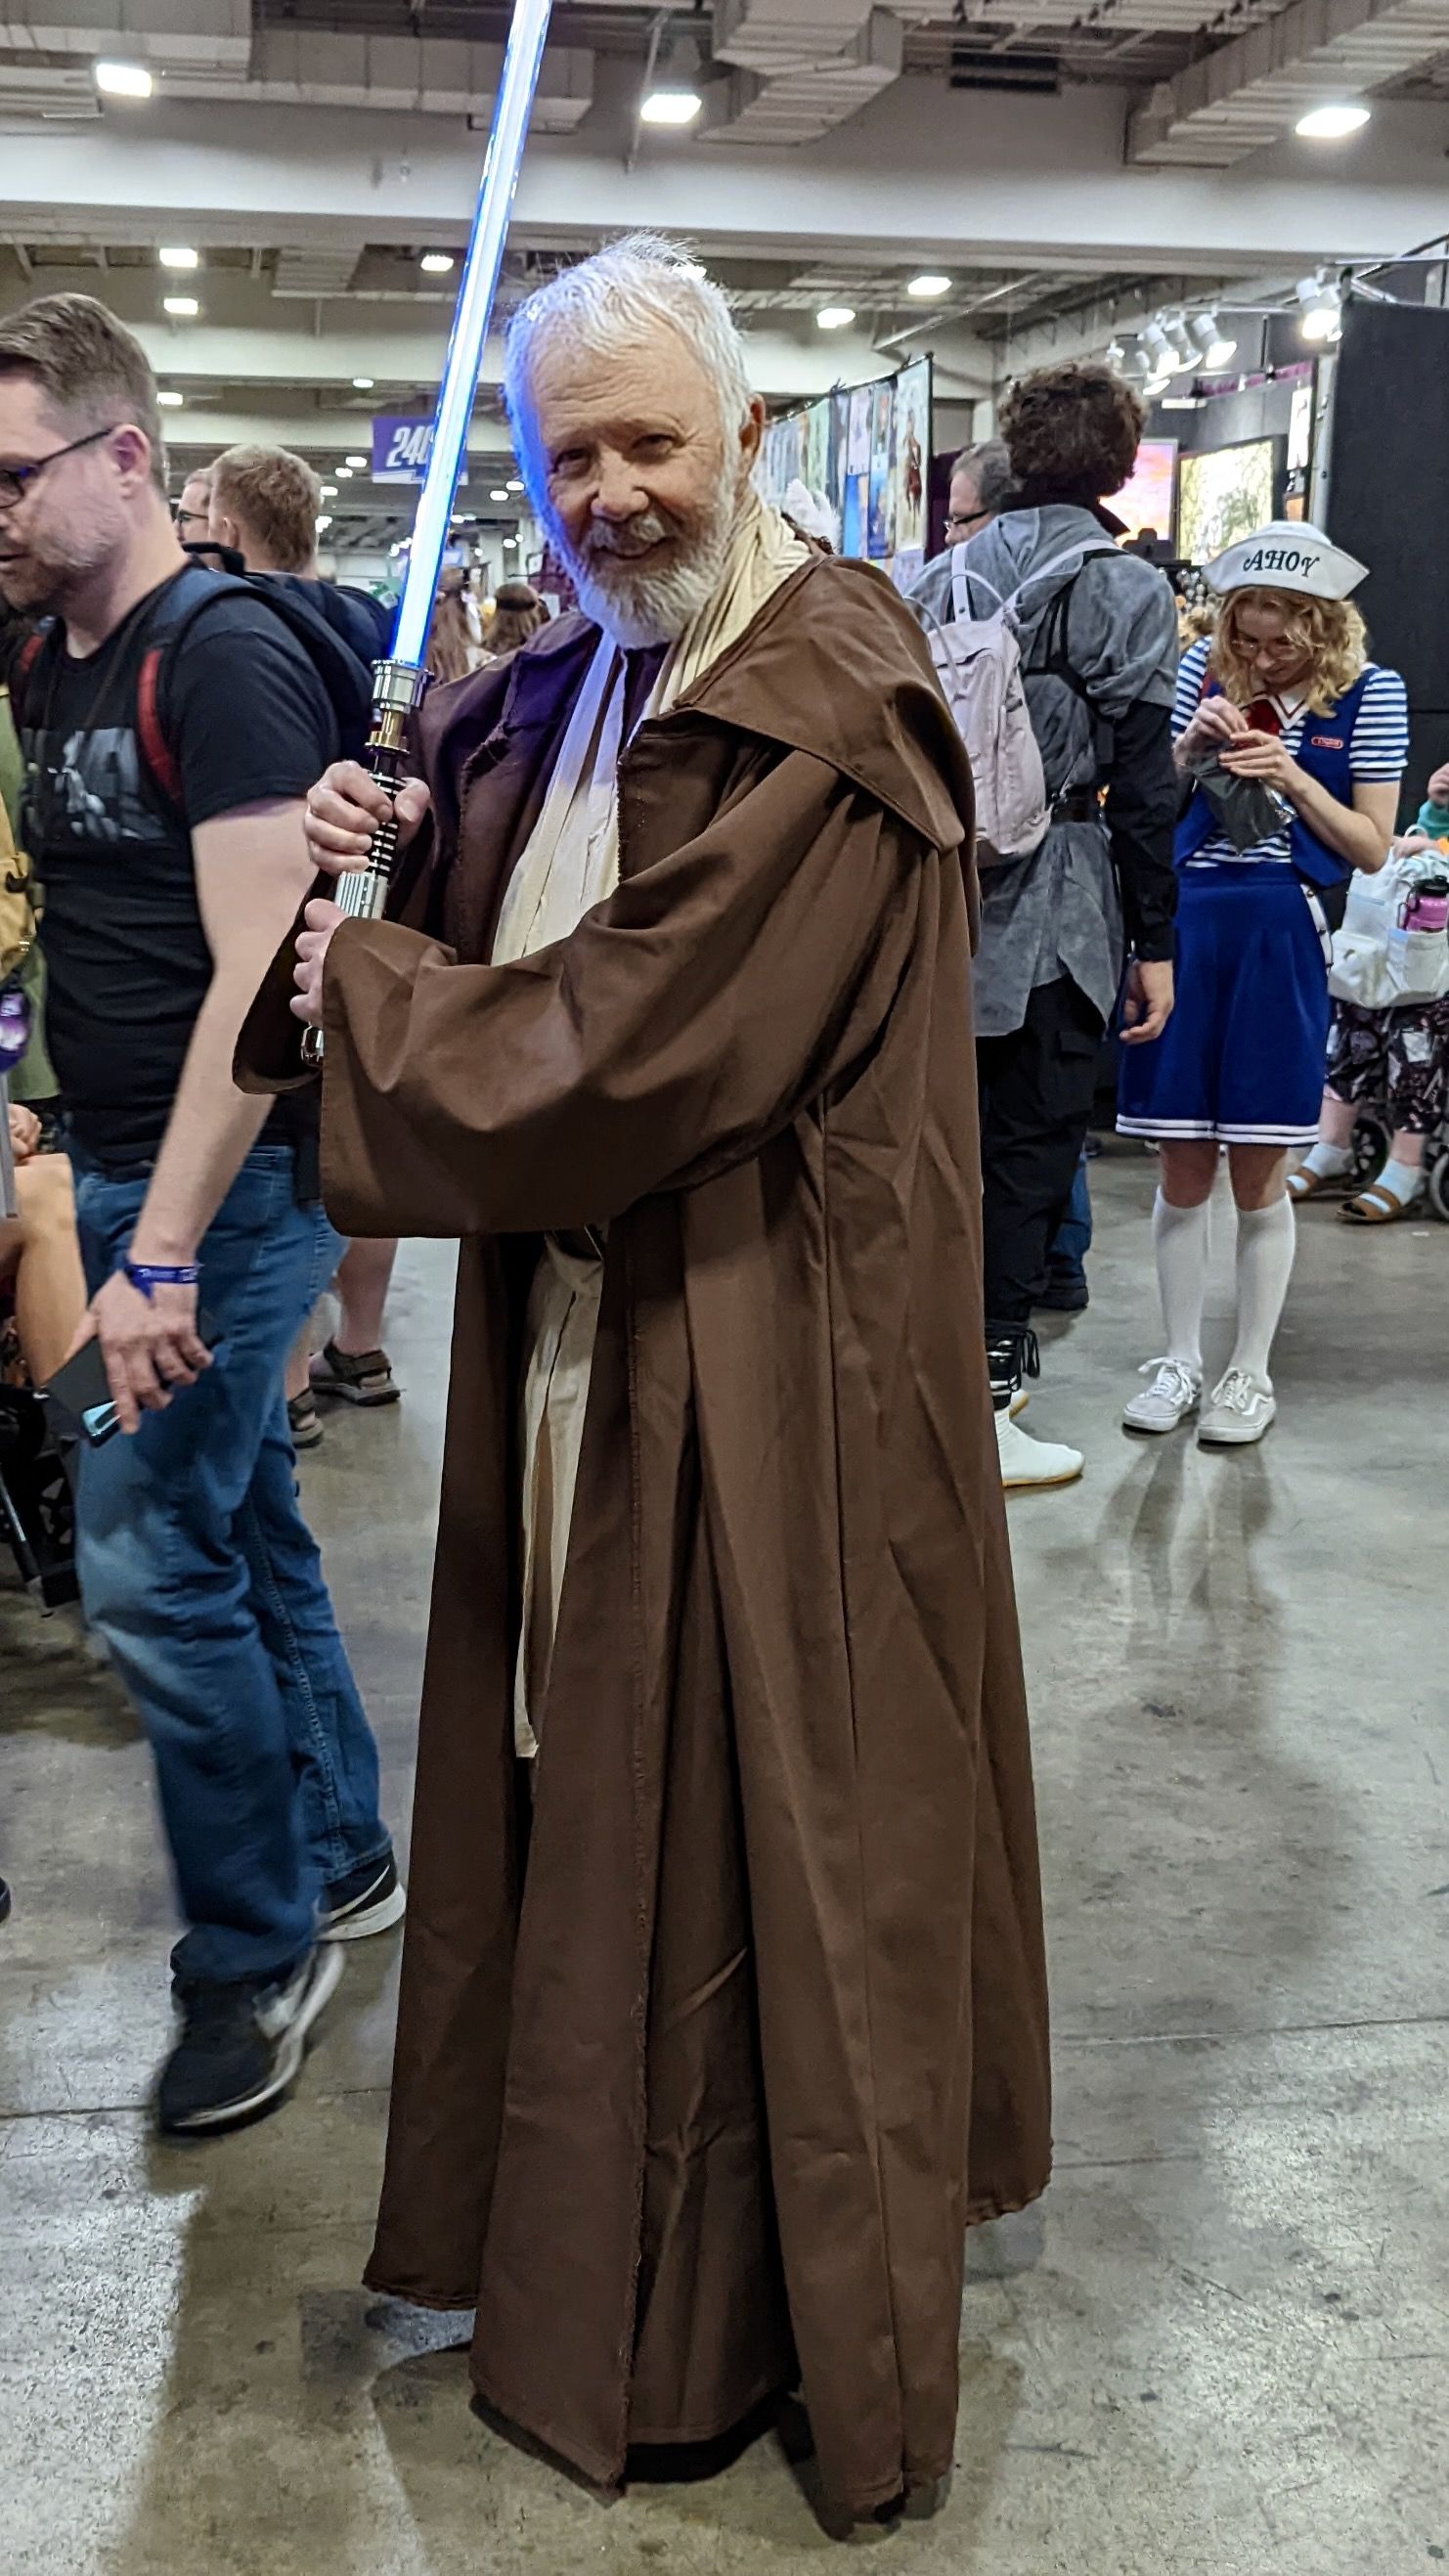 A man with white hair and beard is costumed as Obi-Wan Kenobi.